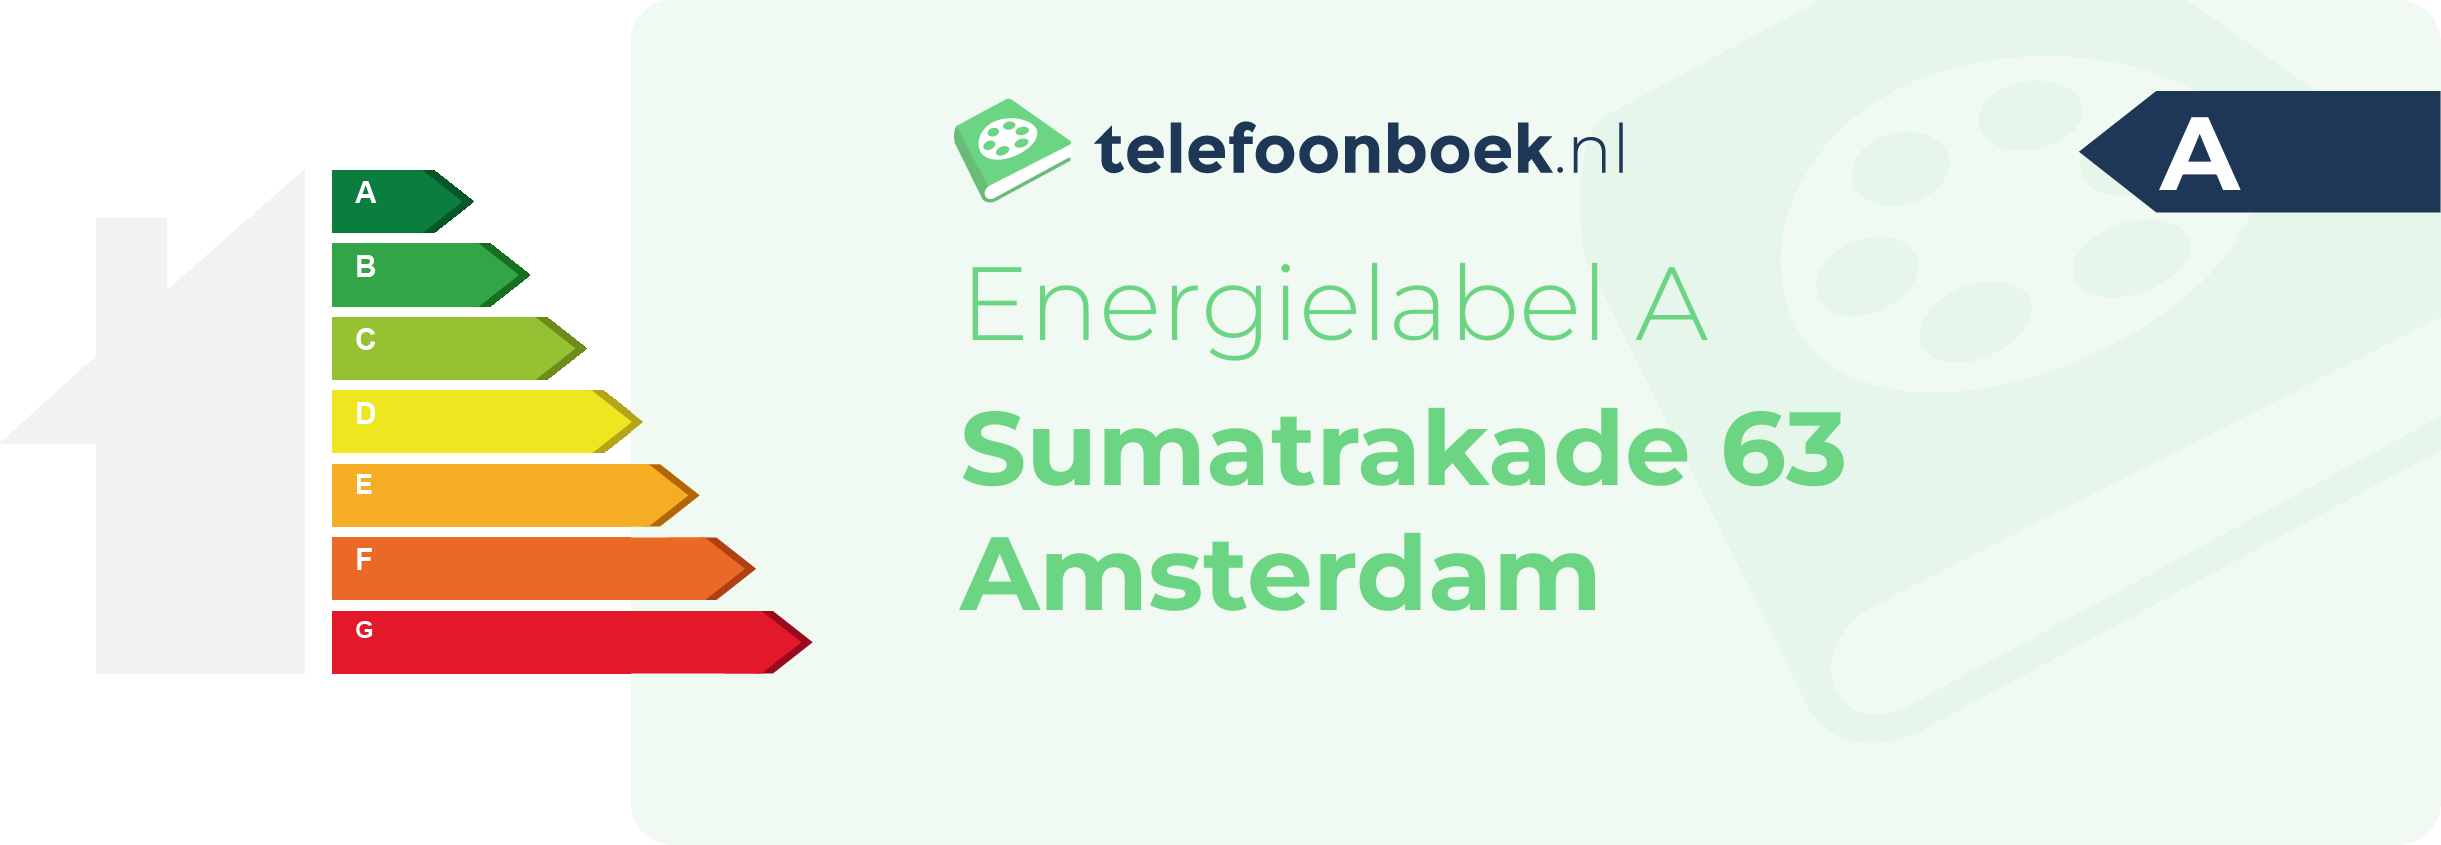 Energielabel Sumatrakade 63 Amsterdam